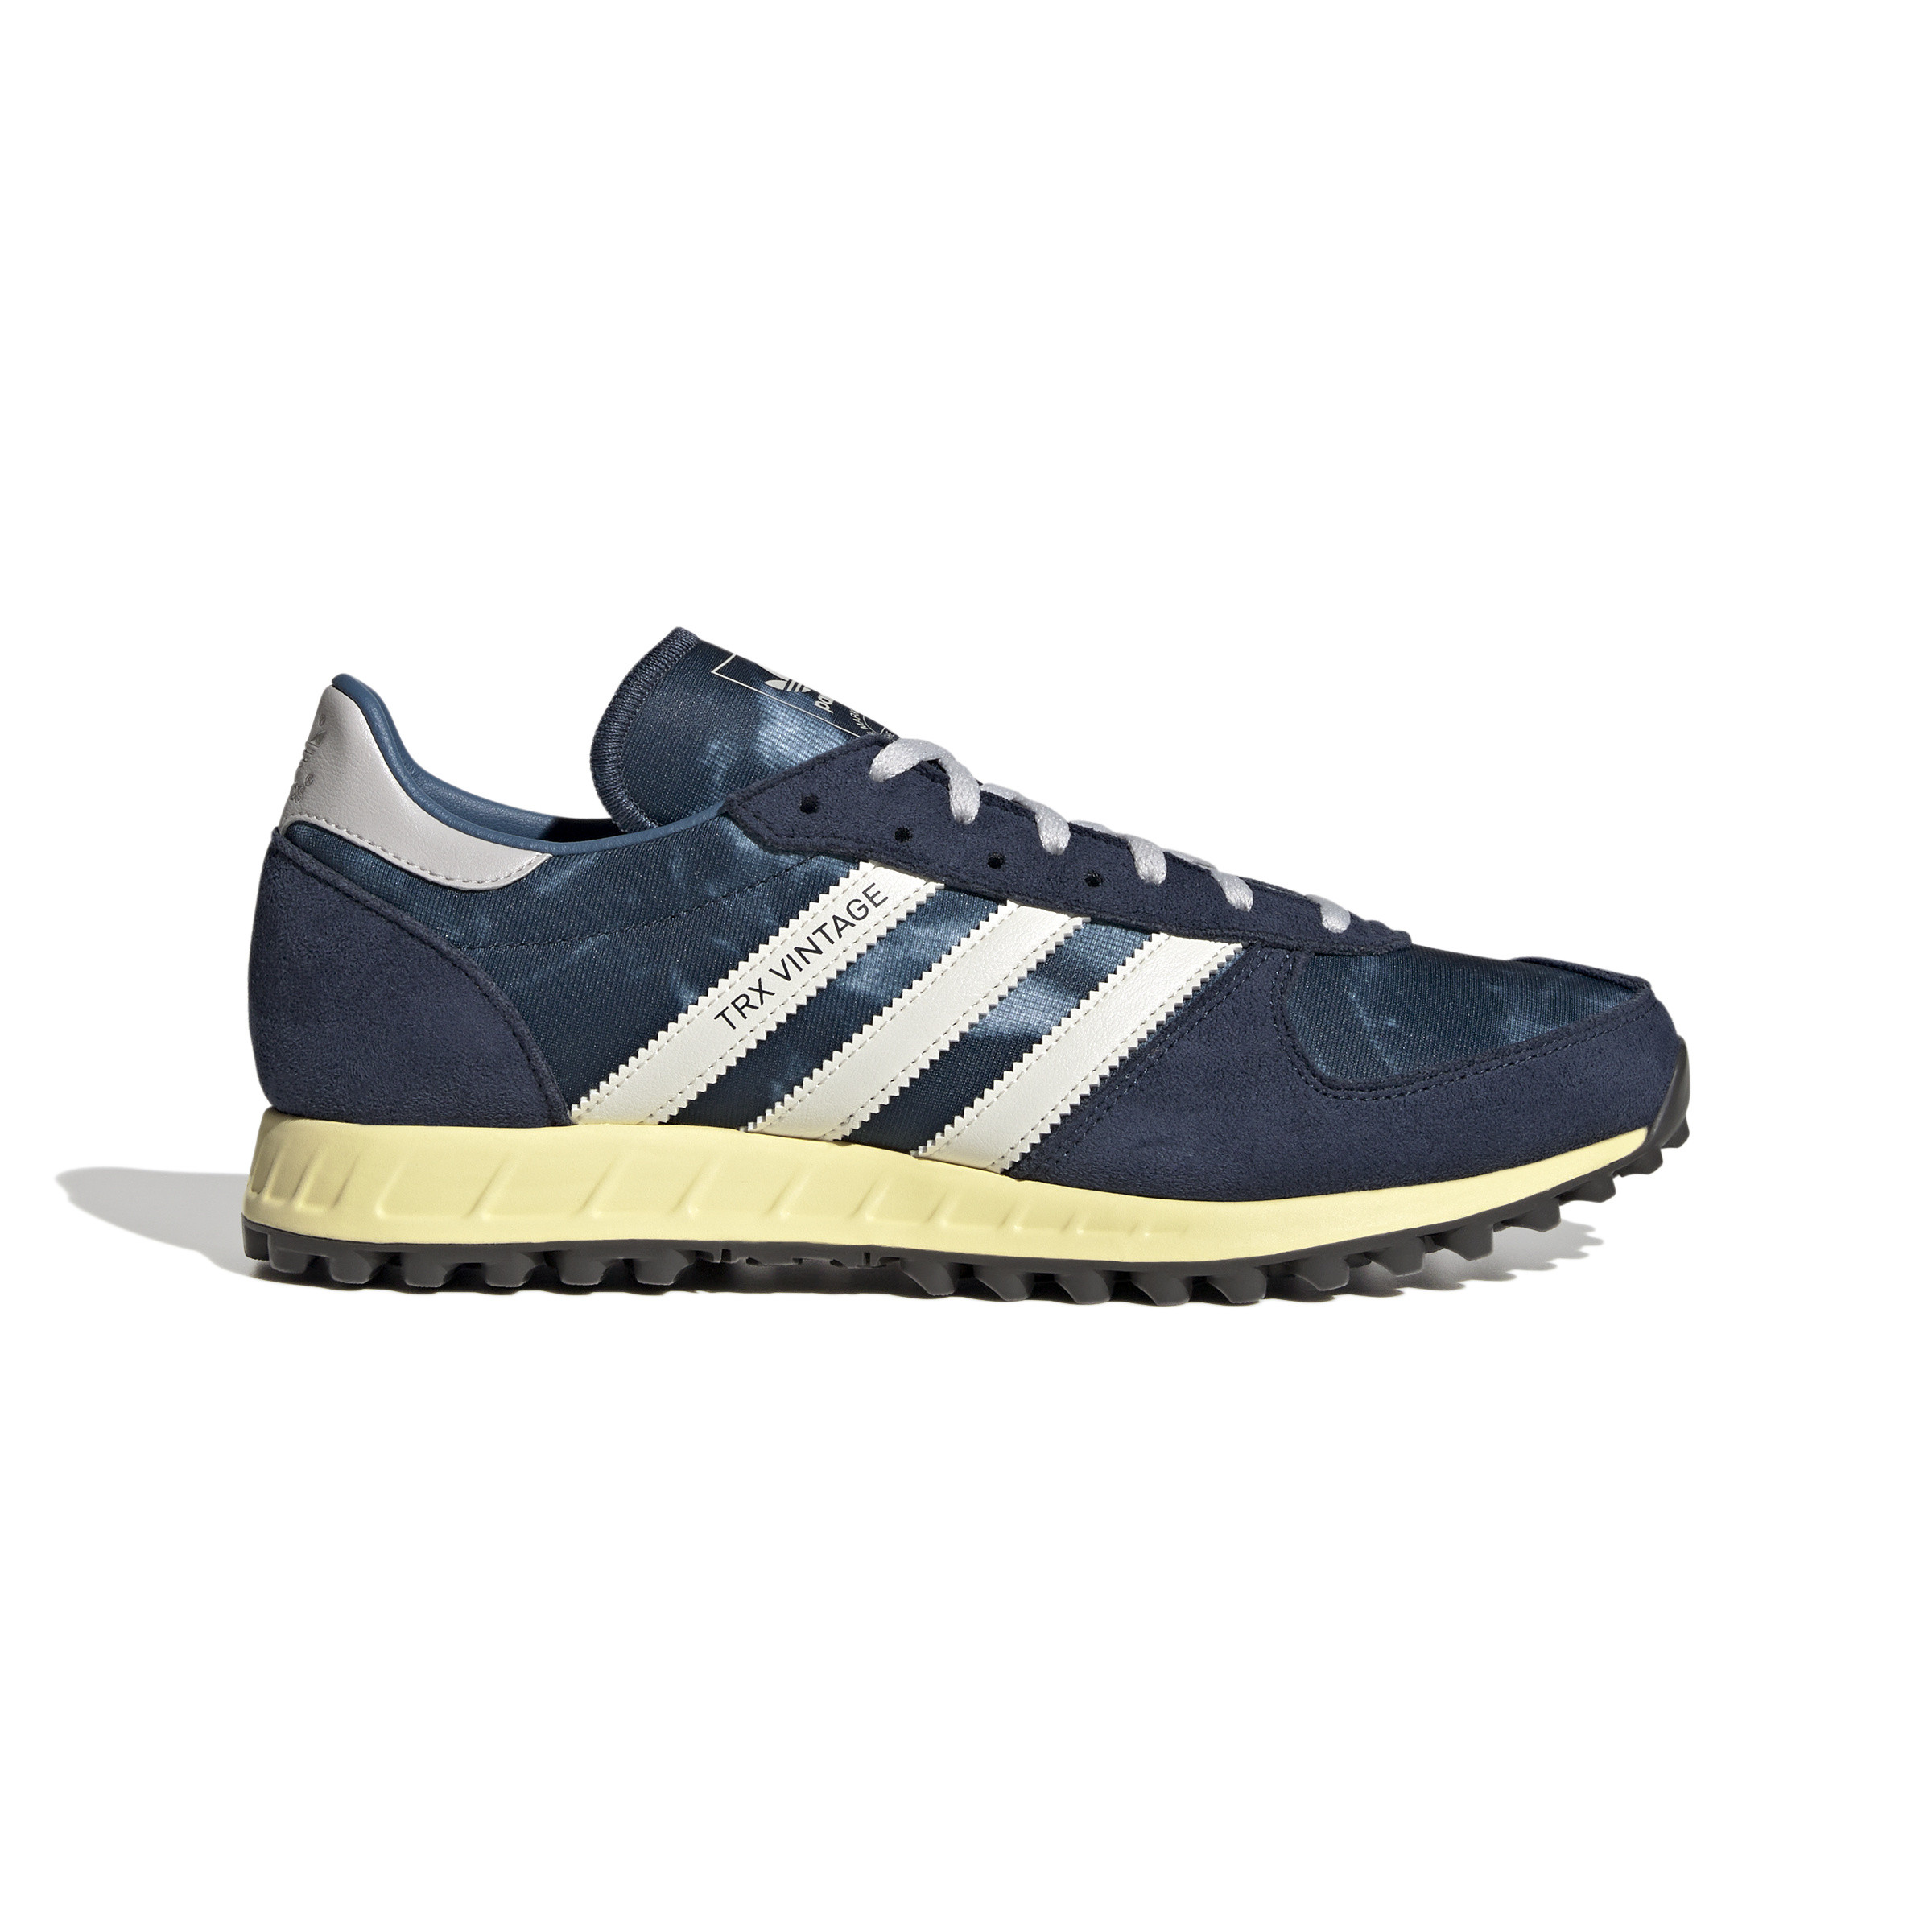 Adidas - Adidas Trx Vintage Shoes, Blue, large image number 0